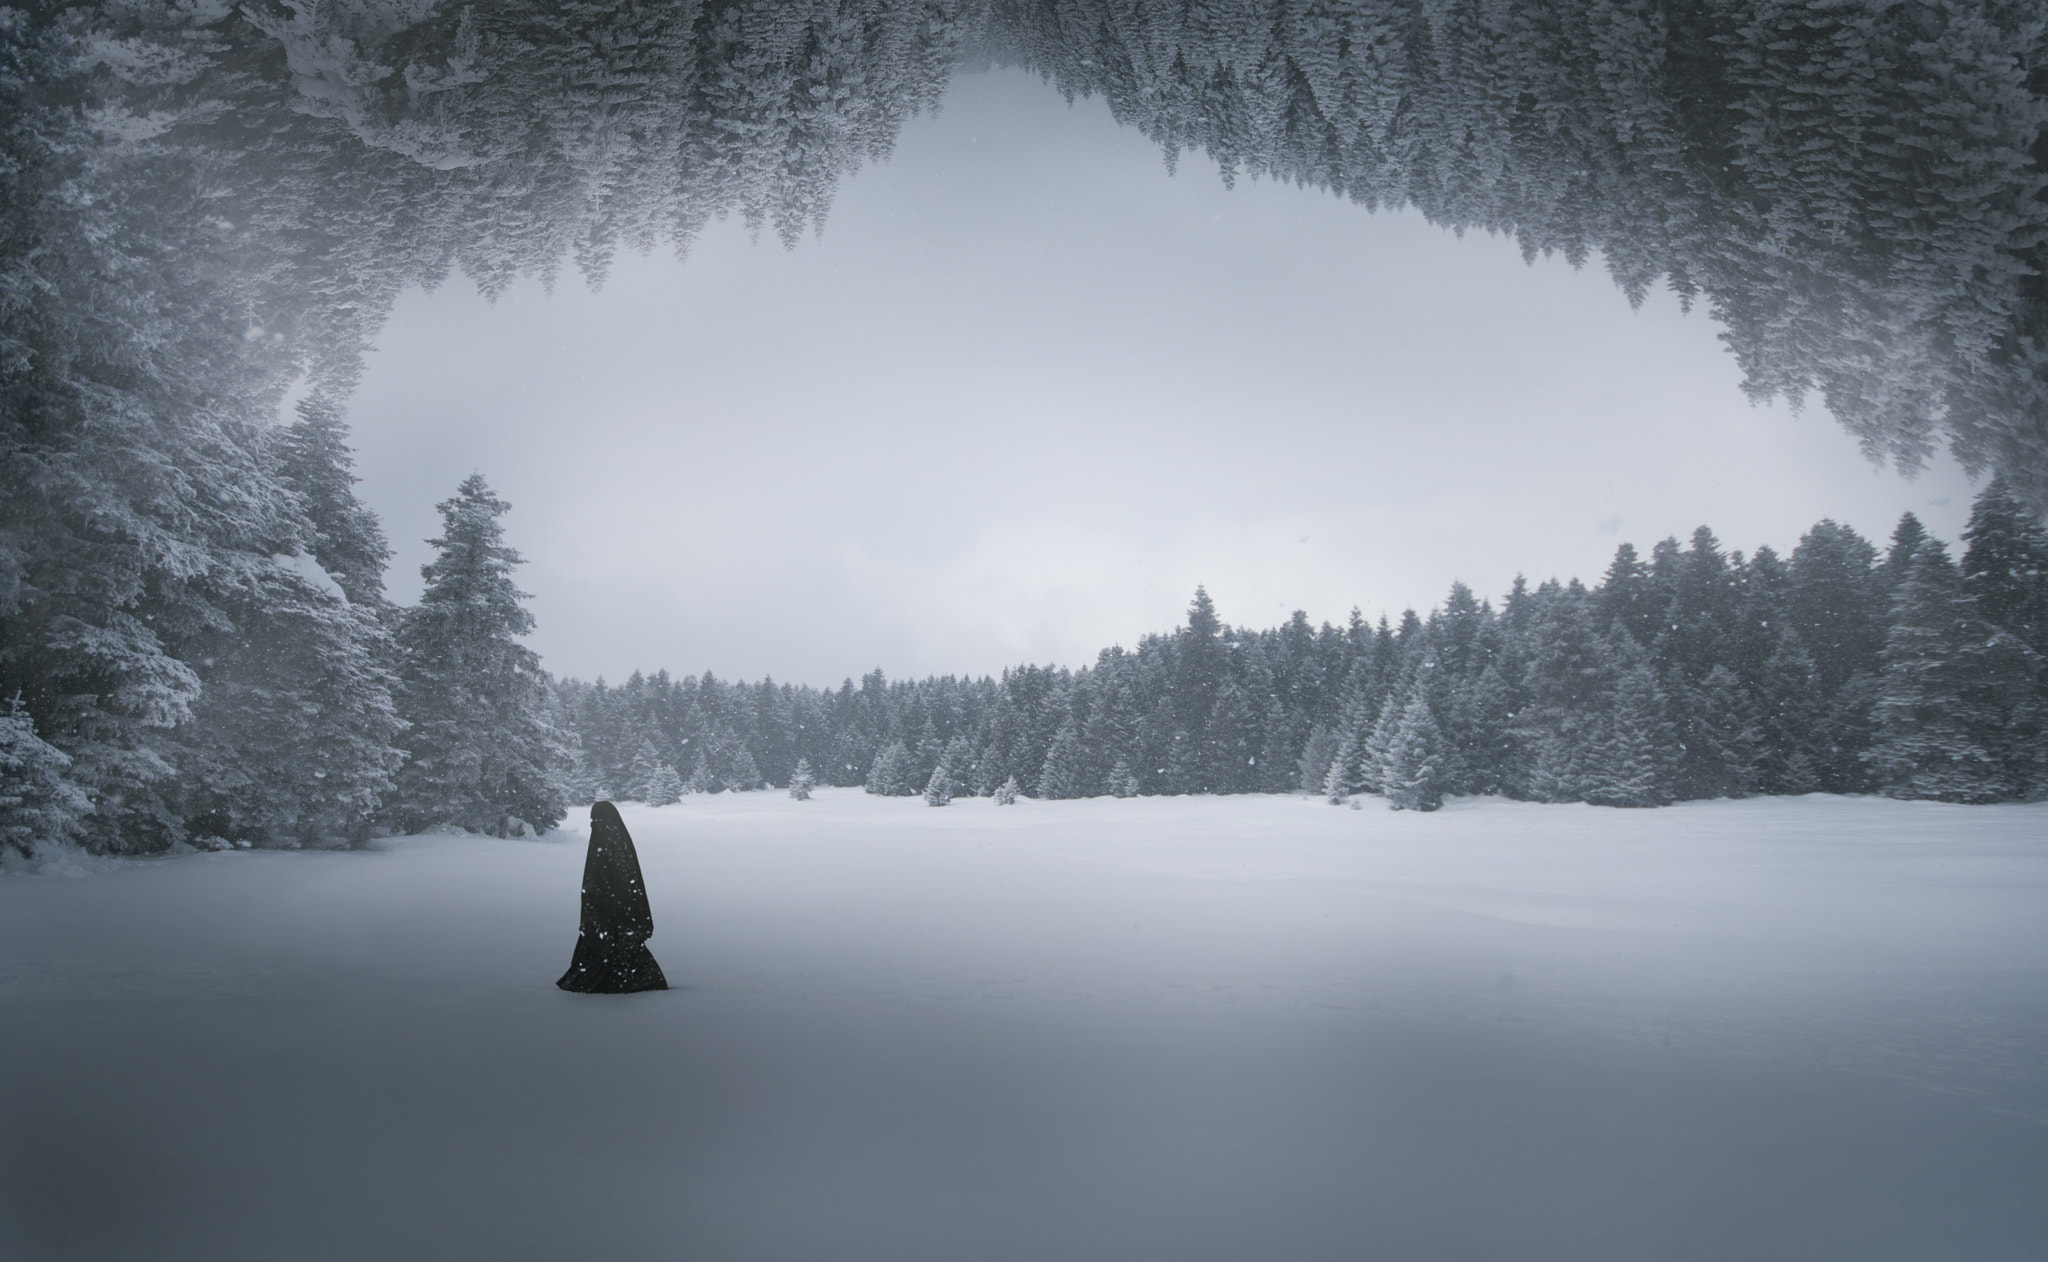 General 2048x1262 Ozkan Durakoglu nature winter digital art loneliness outdoors trees 500px snow snowing overcast